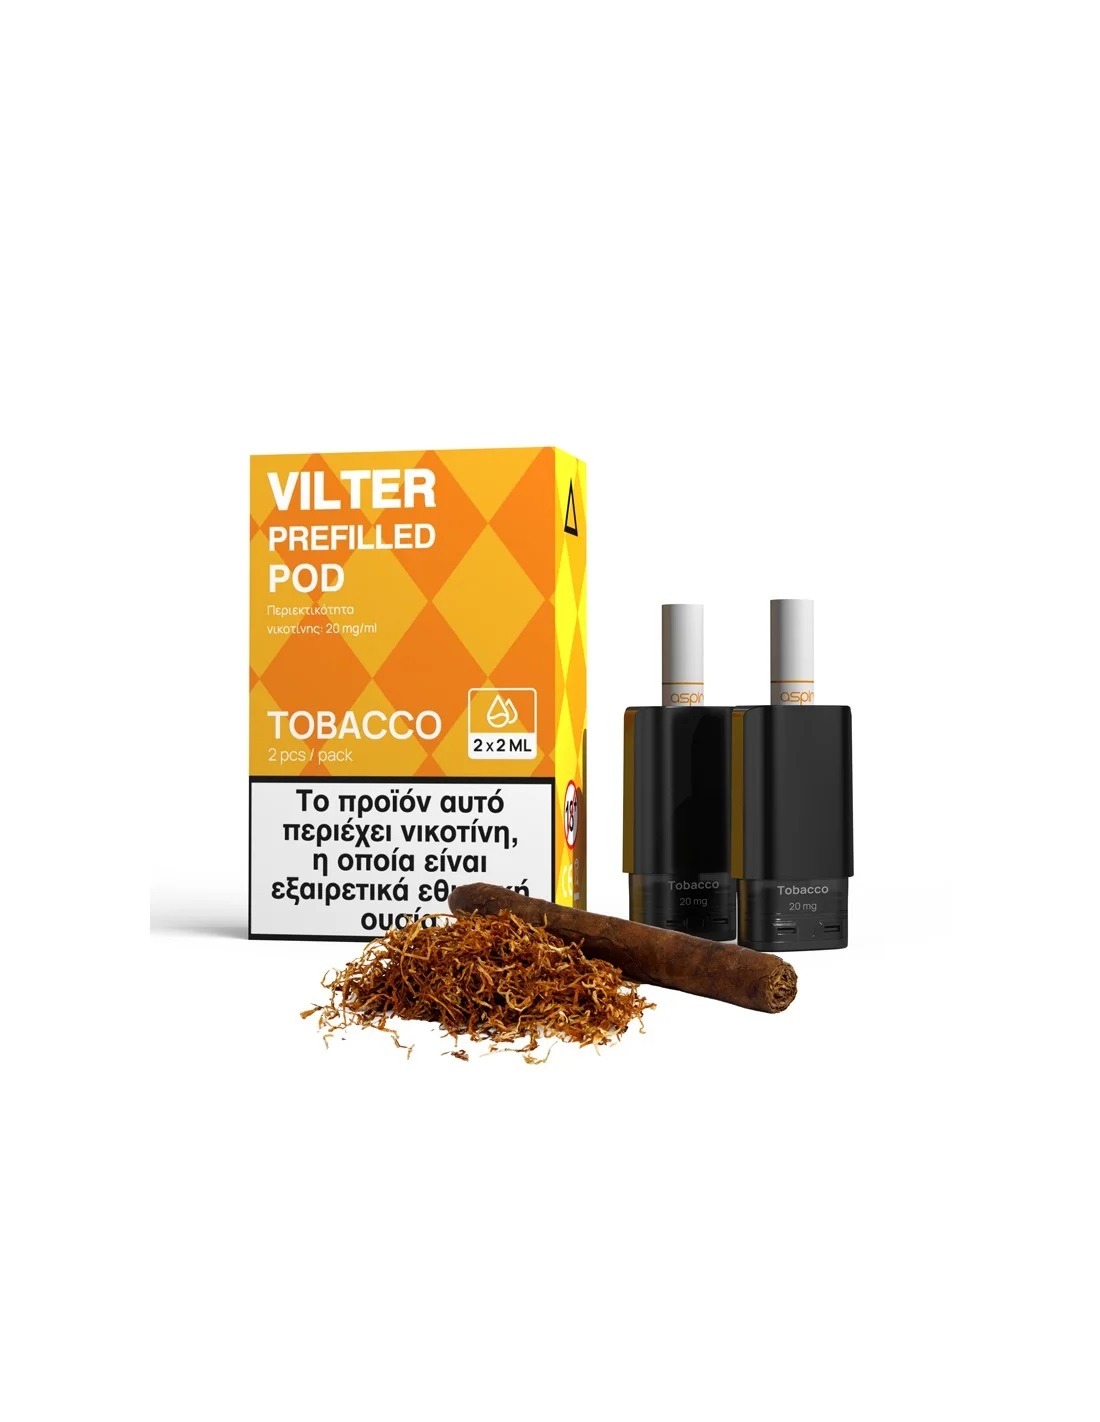 Aspire Vilter Tobacco Prefilled Pod 2x2ml (PACK OF 2)